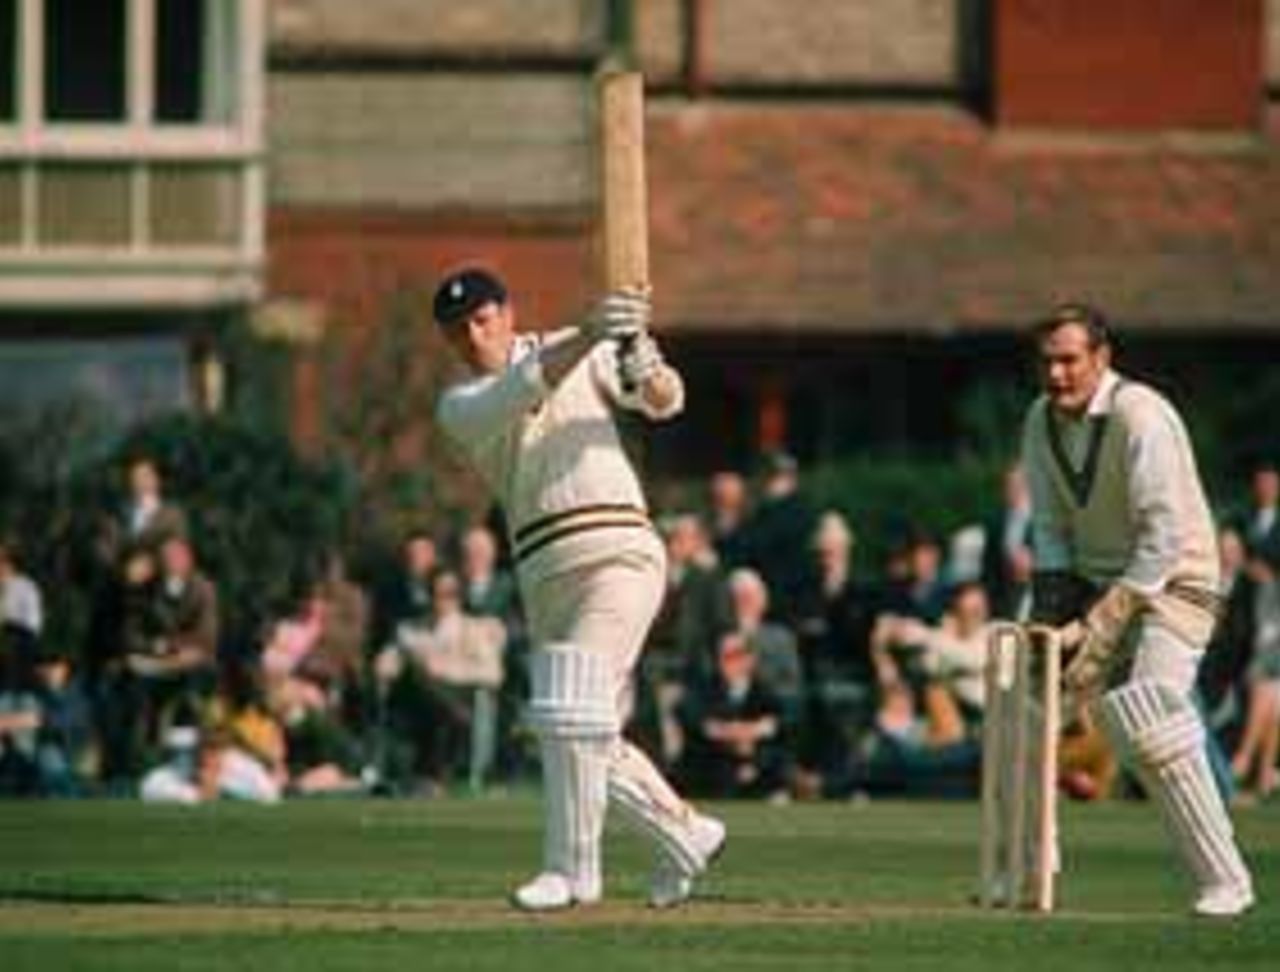 Peter Sainsbury batting